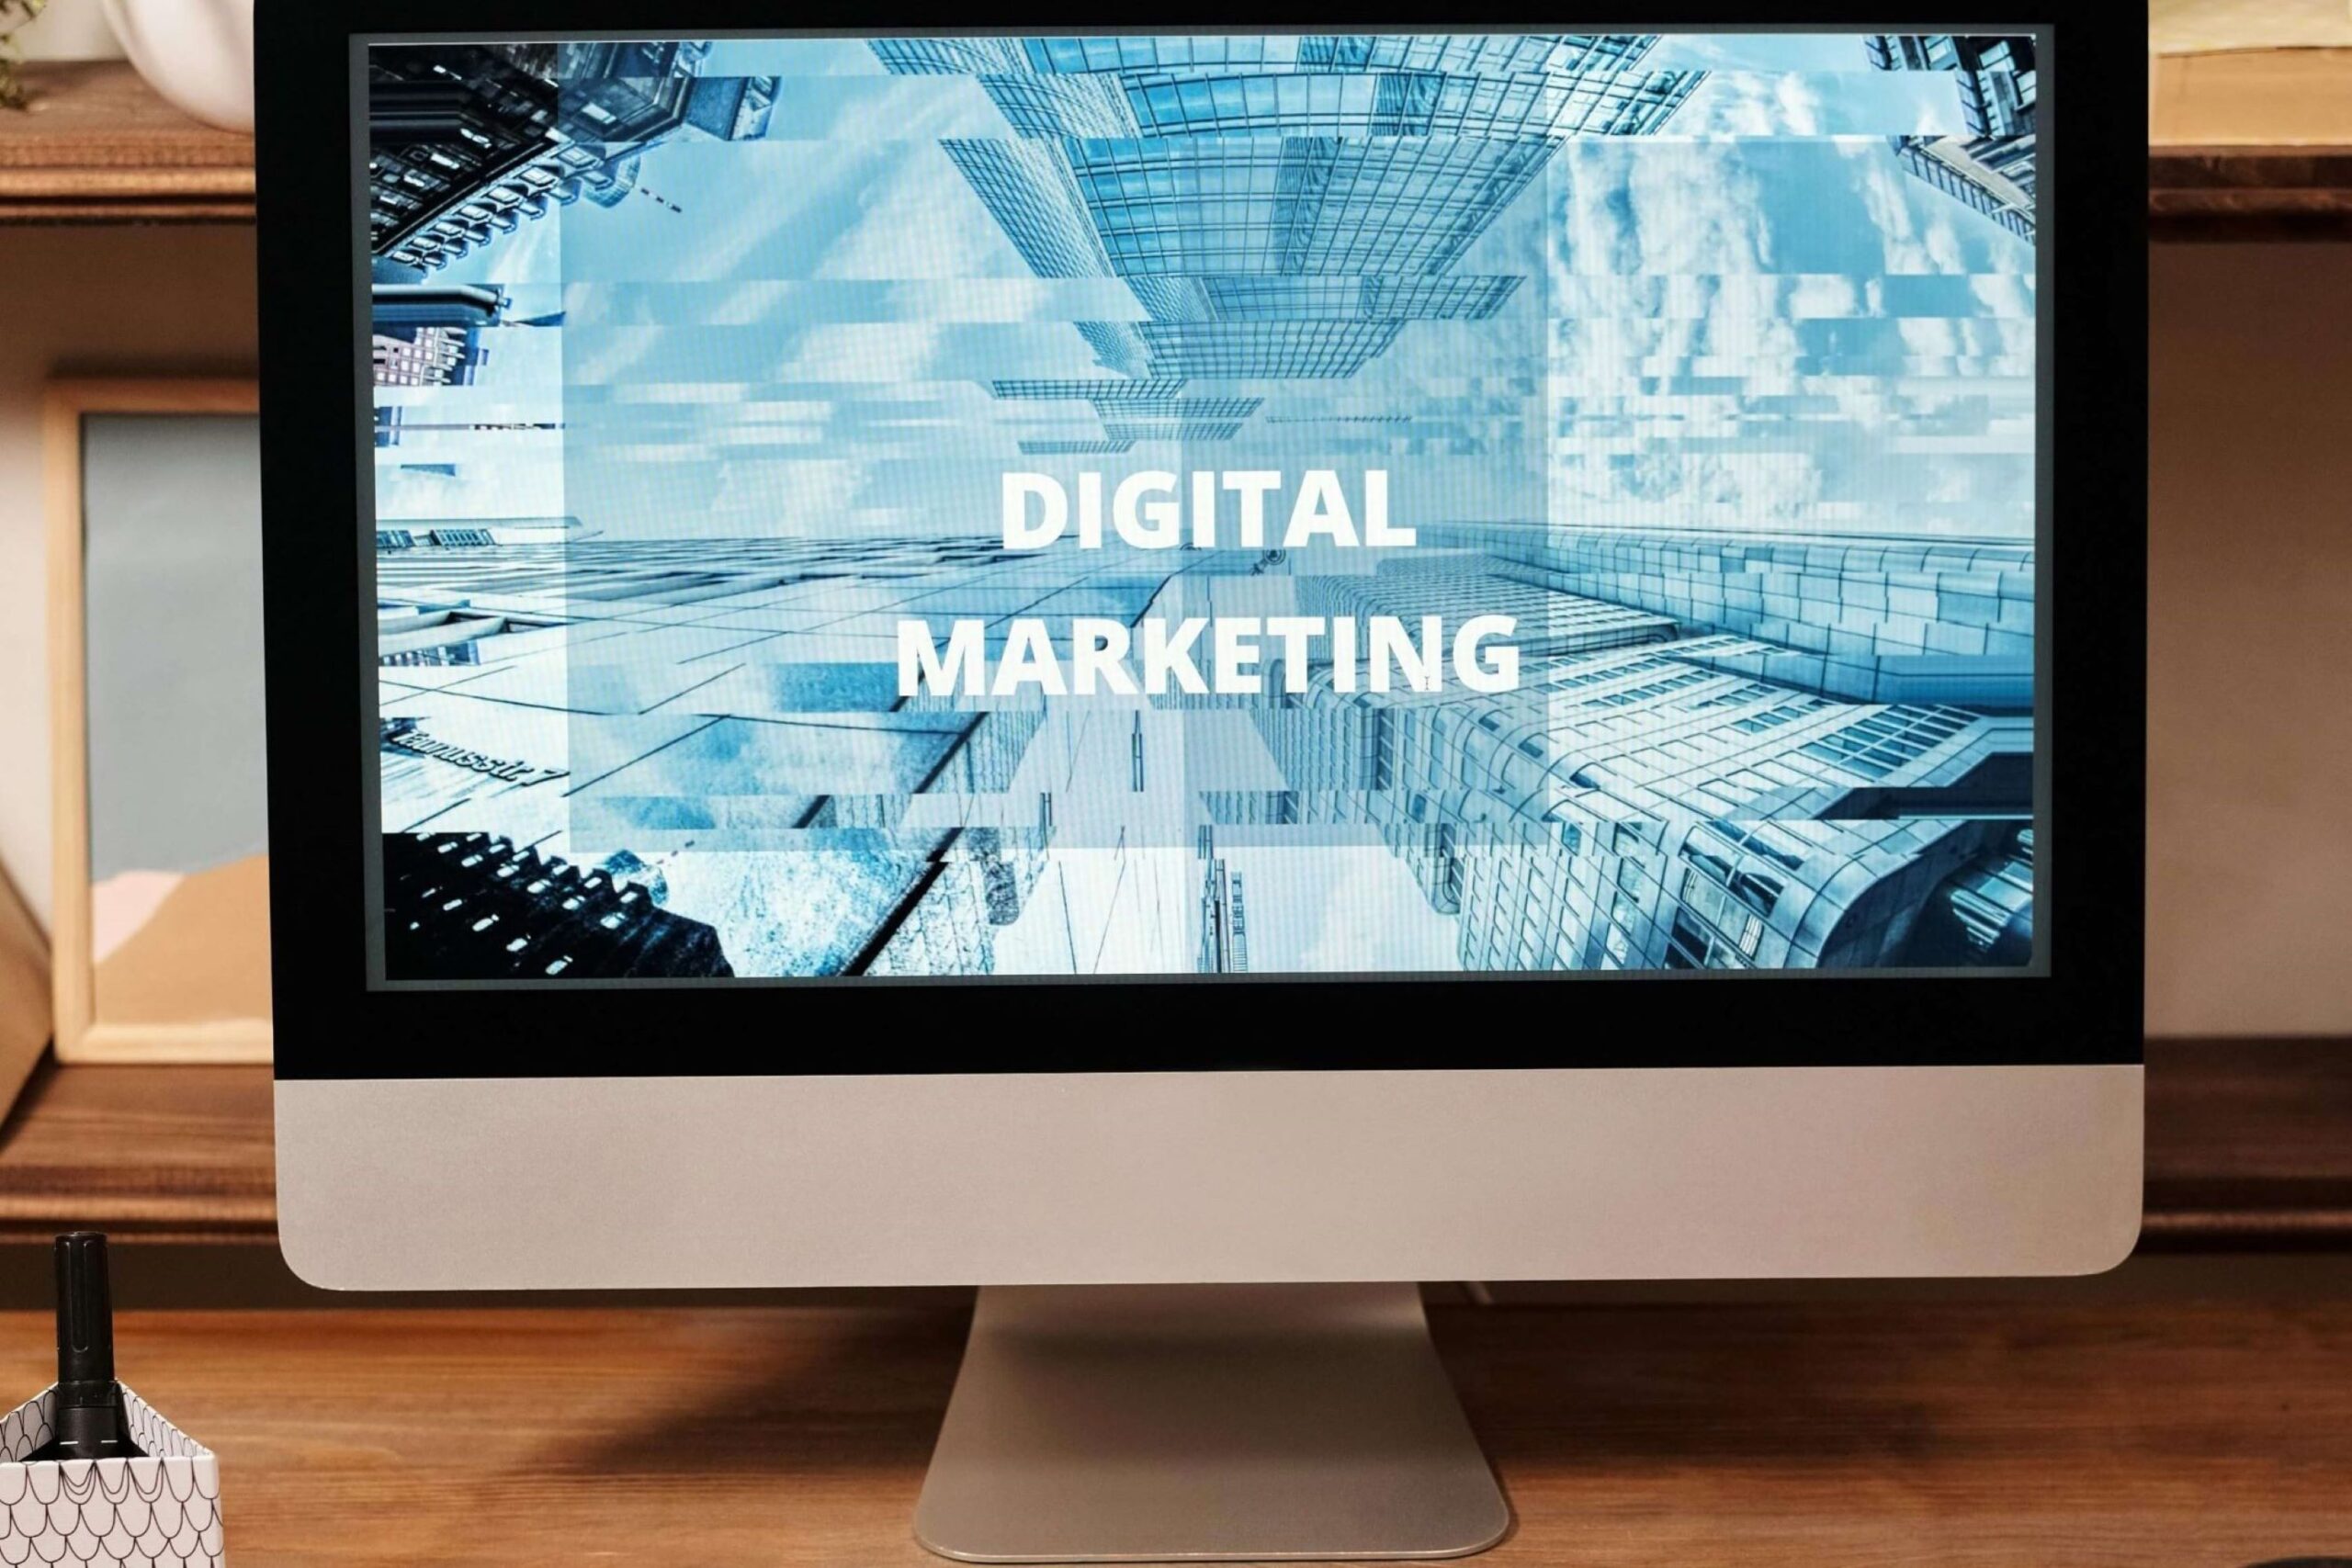 Enllaç a Marketing digital i Psicomarketing